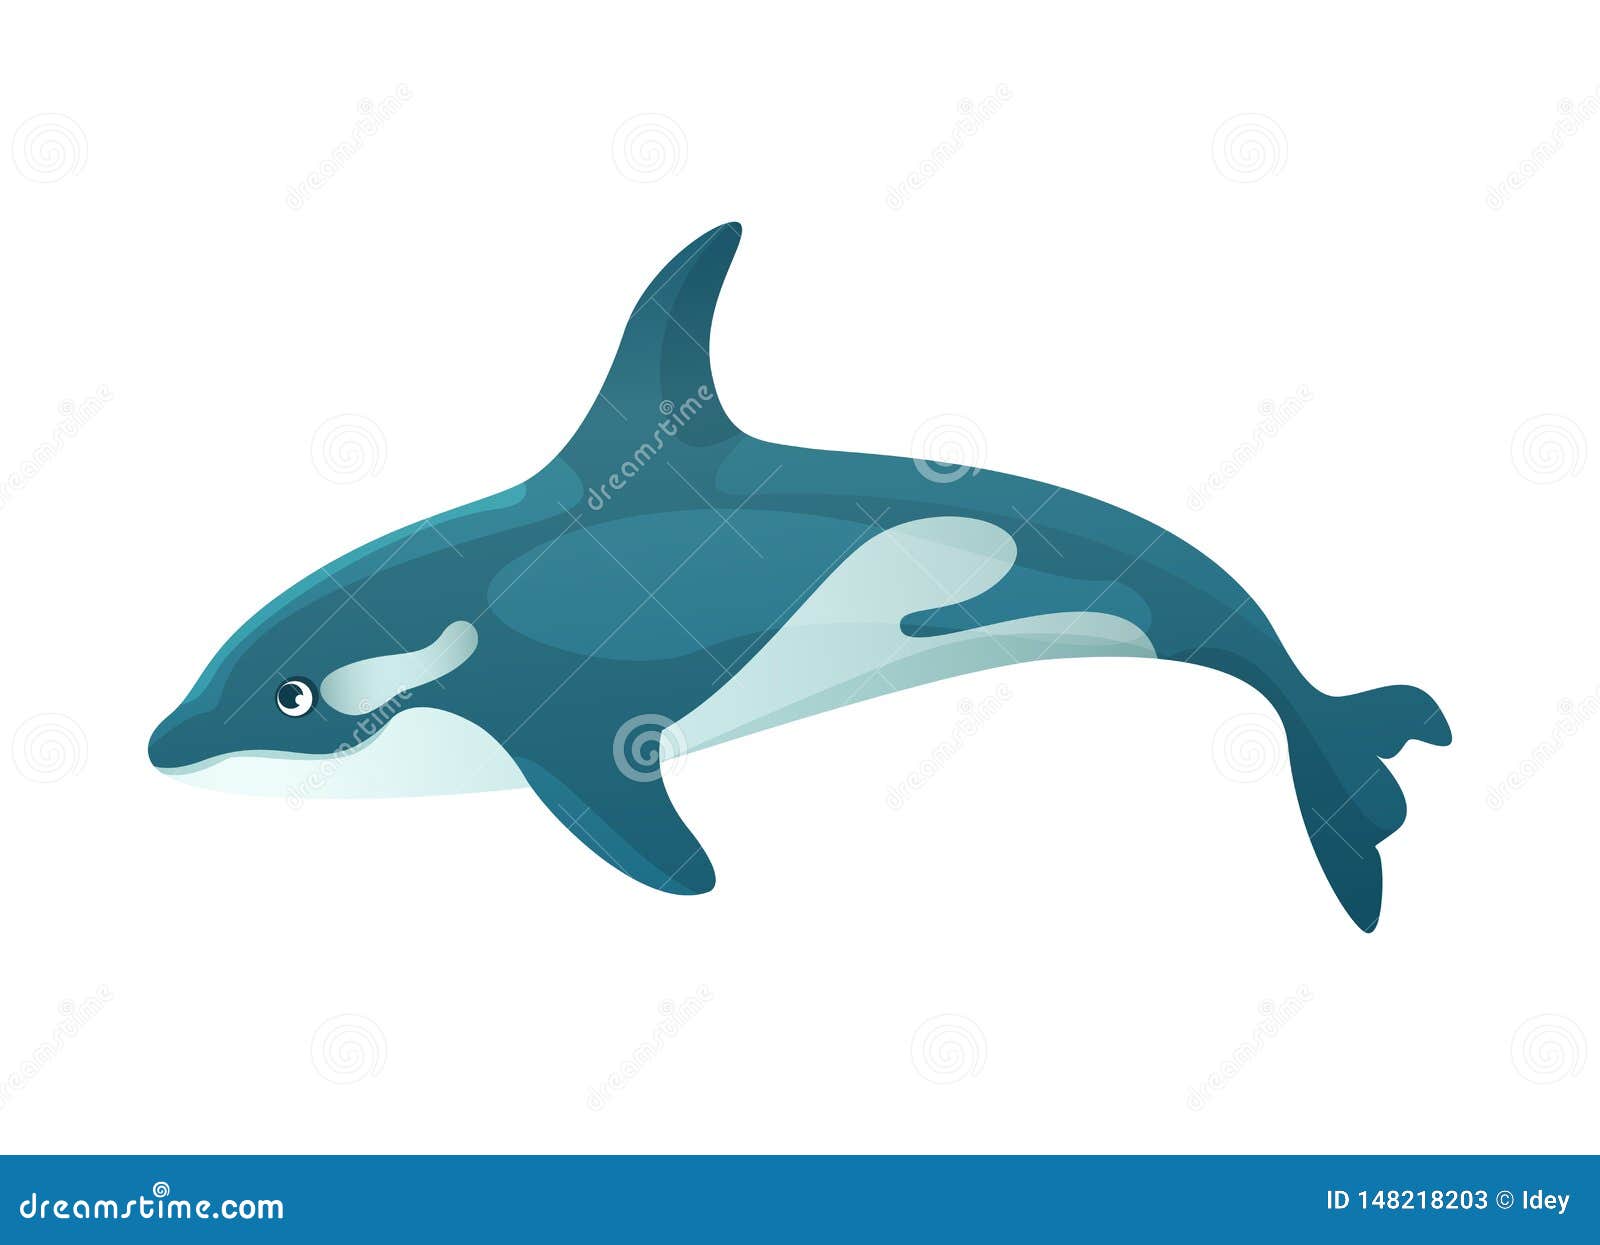 Aquarium Cartoon Ocean Scythe, Killer Whale Animals for Games Isolated  Stock Vector - Illustration of color, food: 148218203